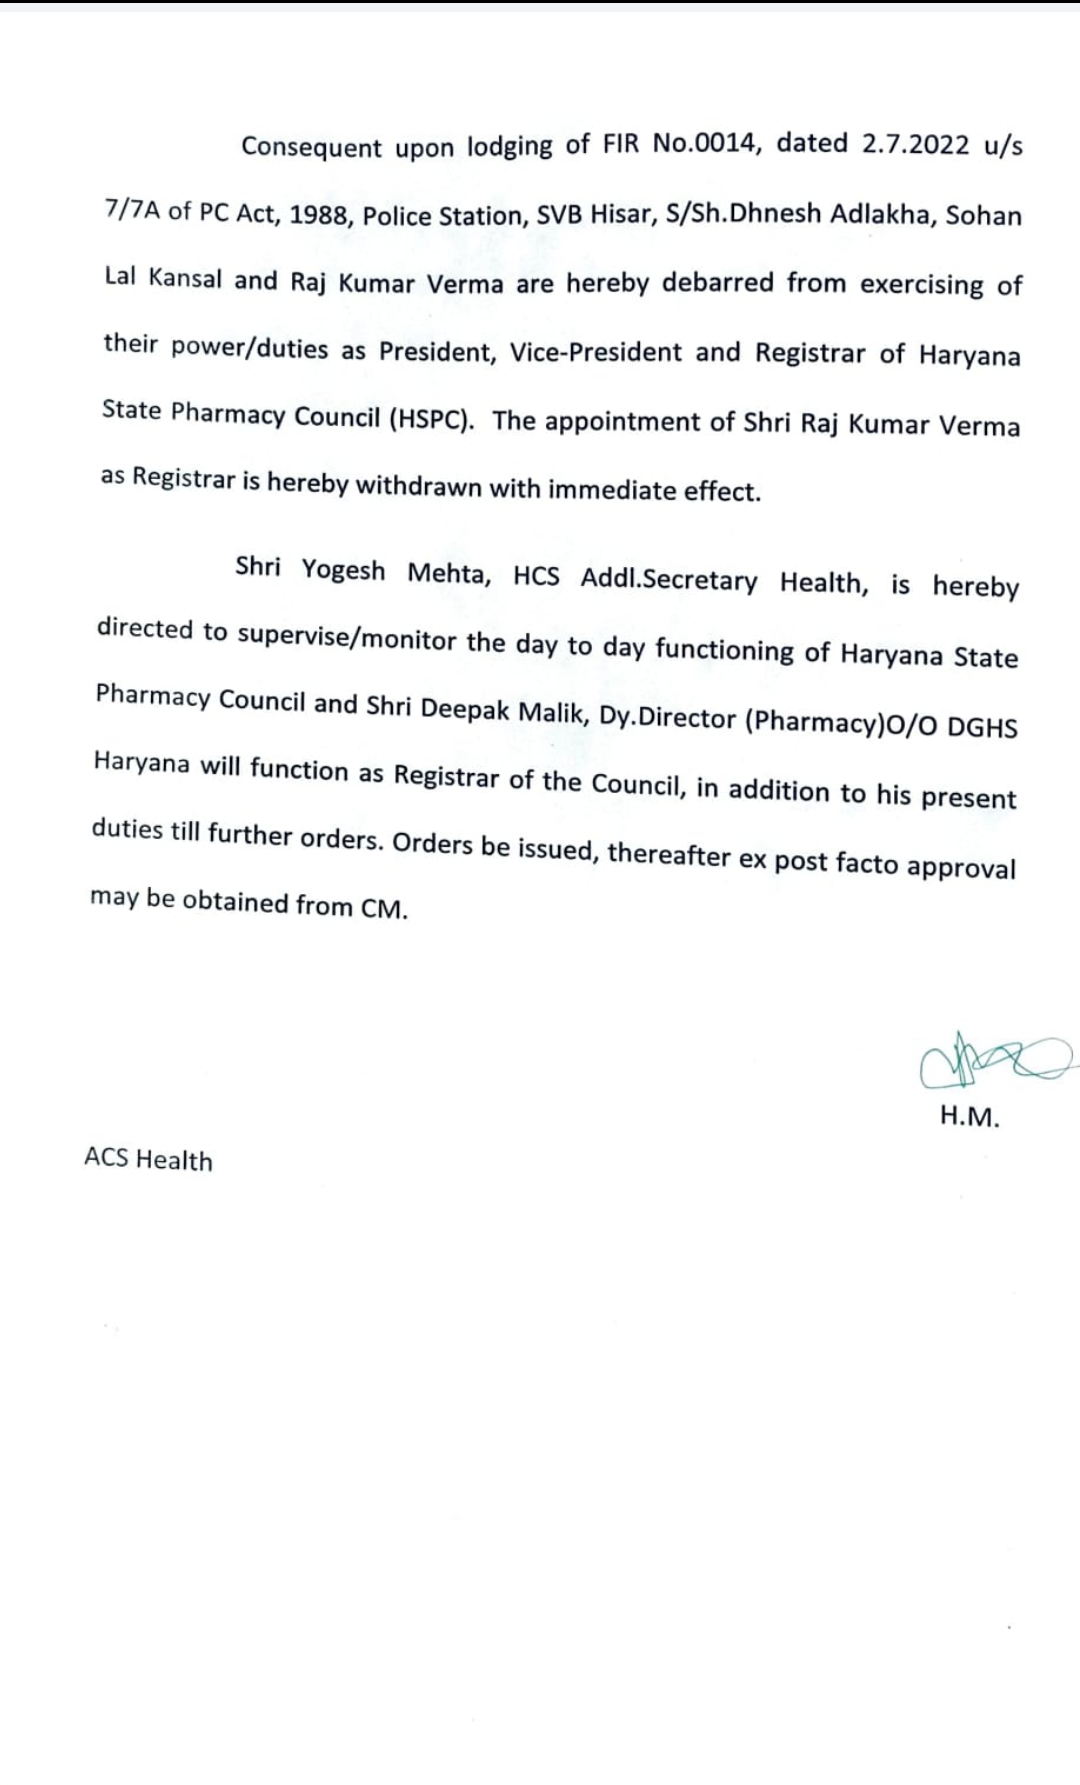 haryana state pharmacy council